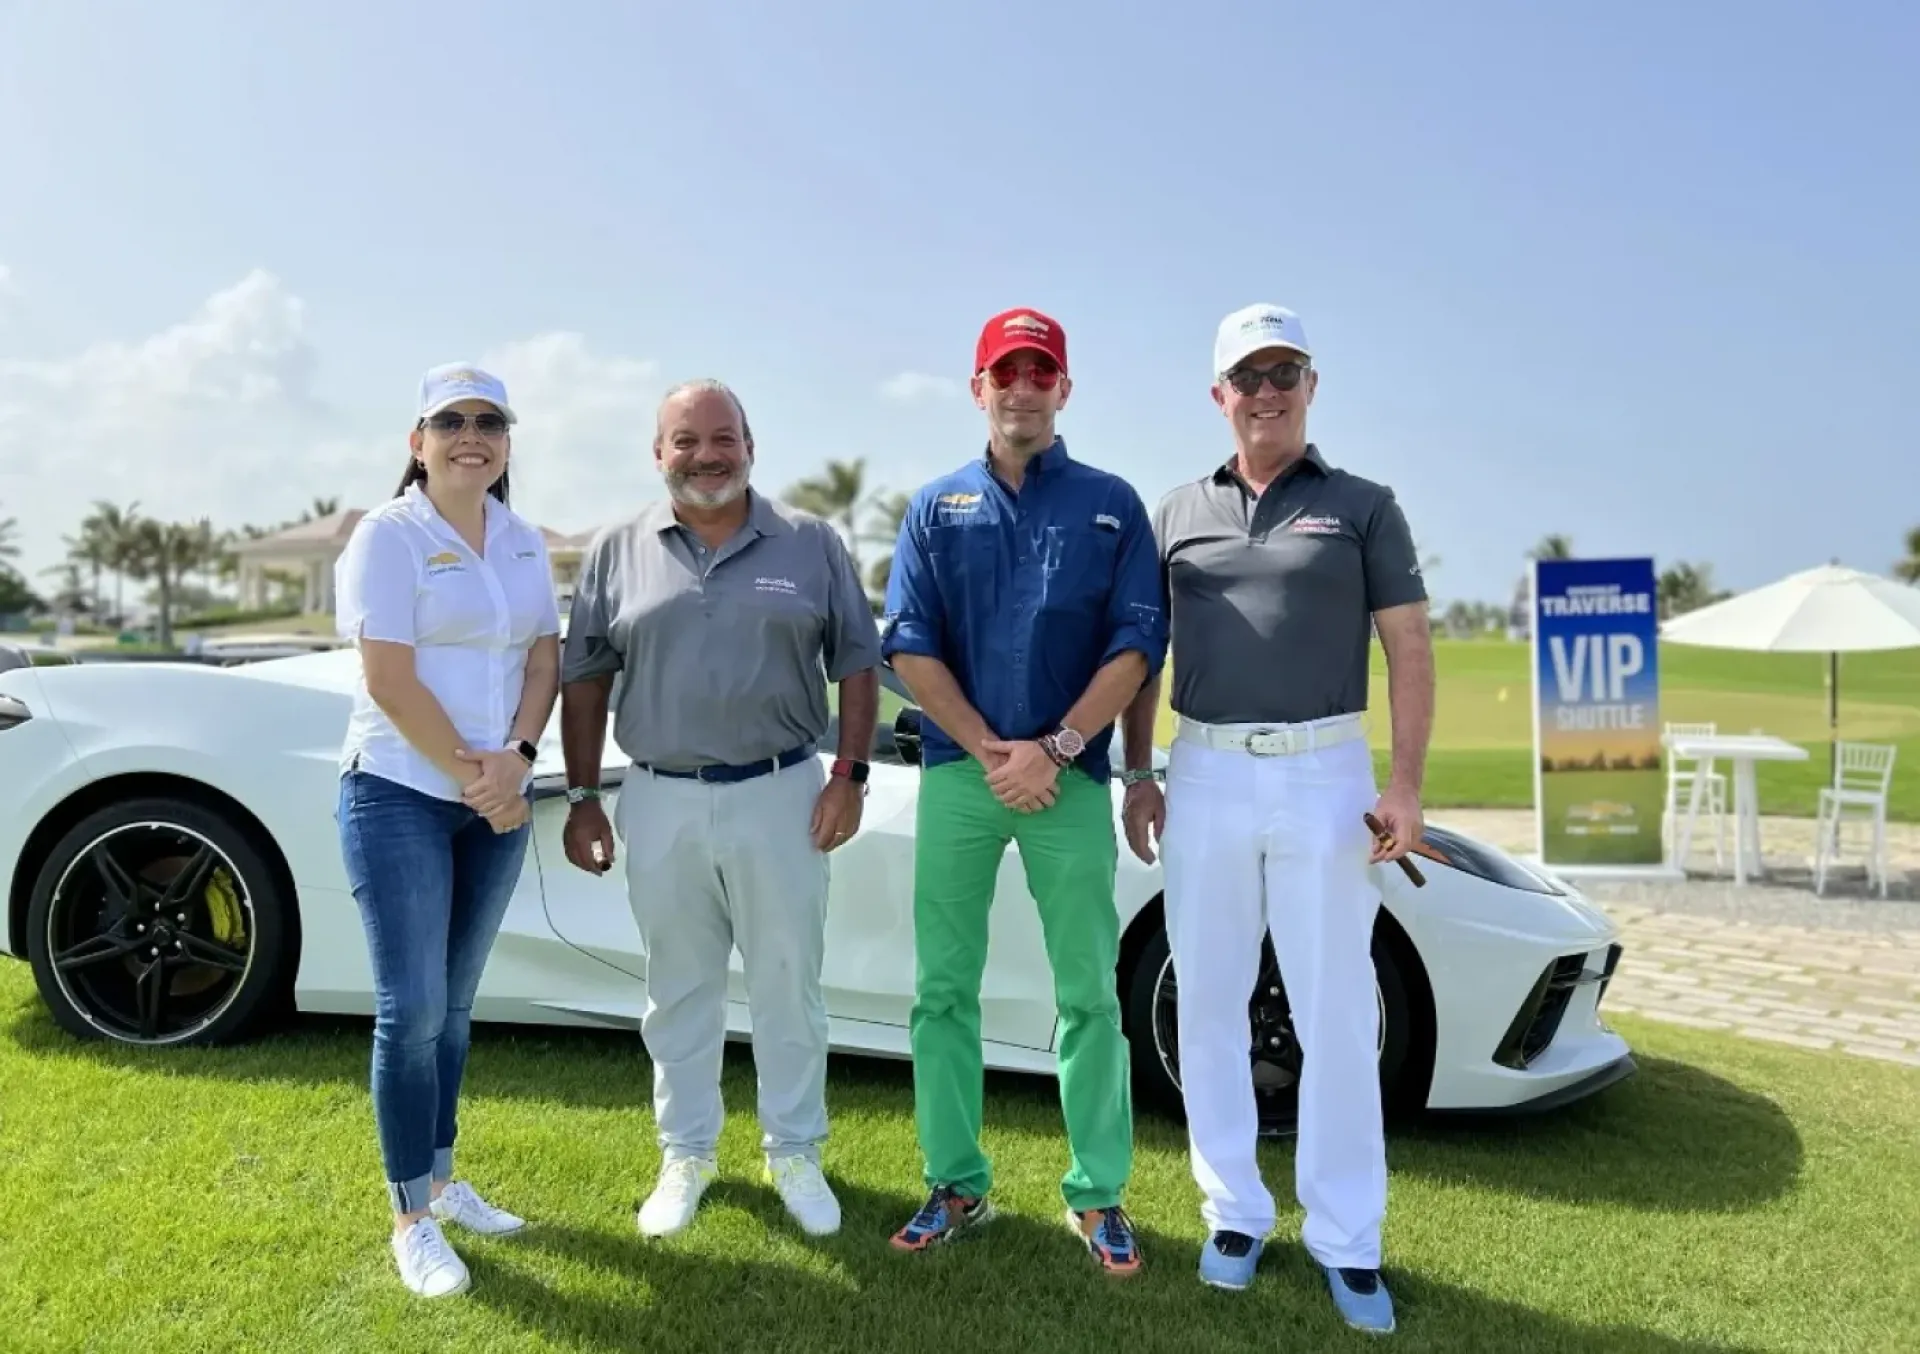 Chevrolet and Santo Domingo Motors join the success of the ADOZONA golf tournament